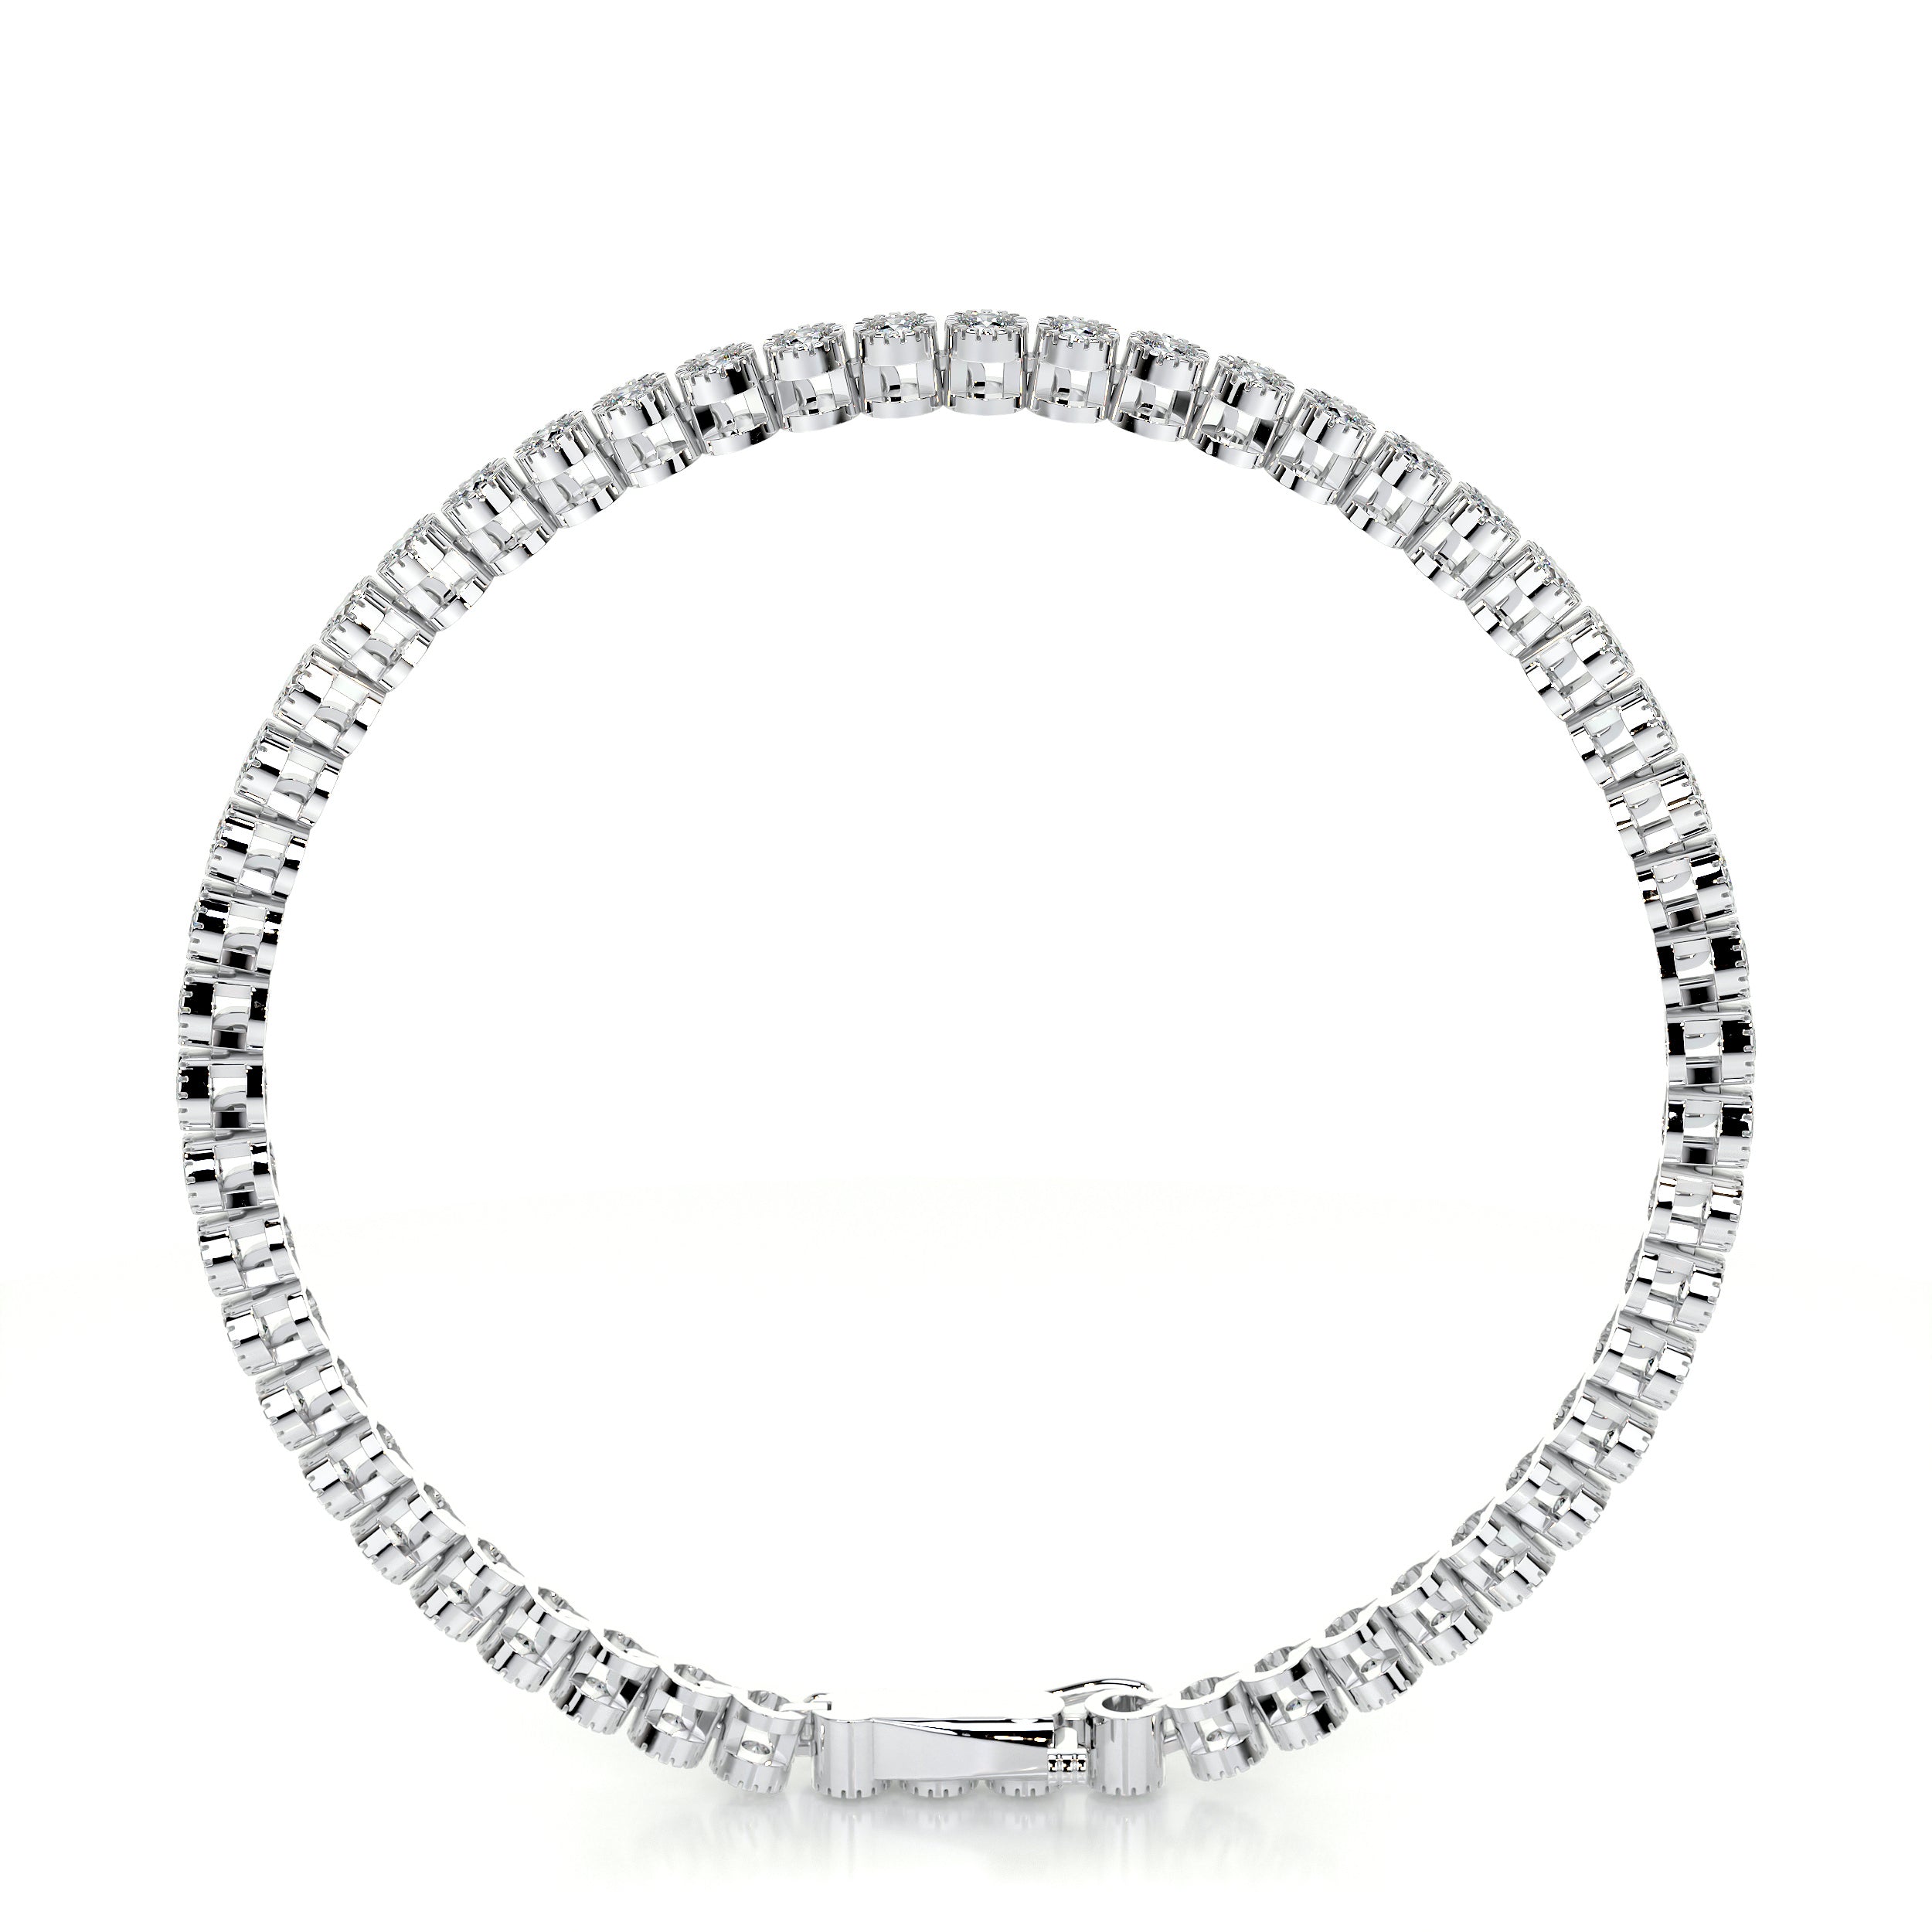 Laura Diamond Tennis Bracelet   (1.50 Carat) -18K White Gold